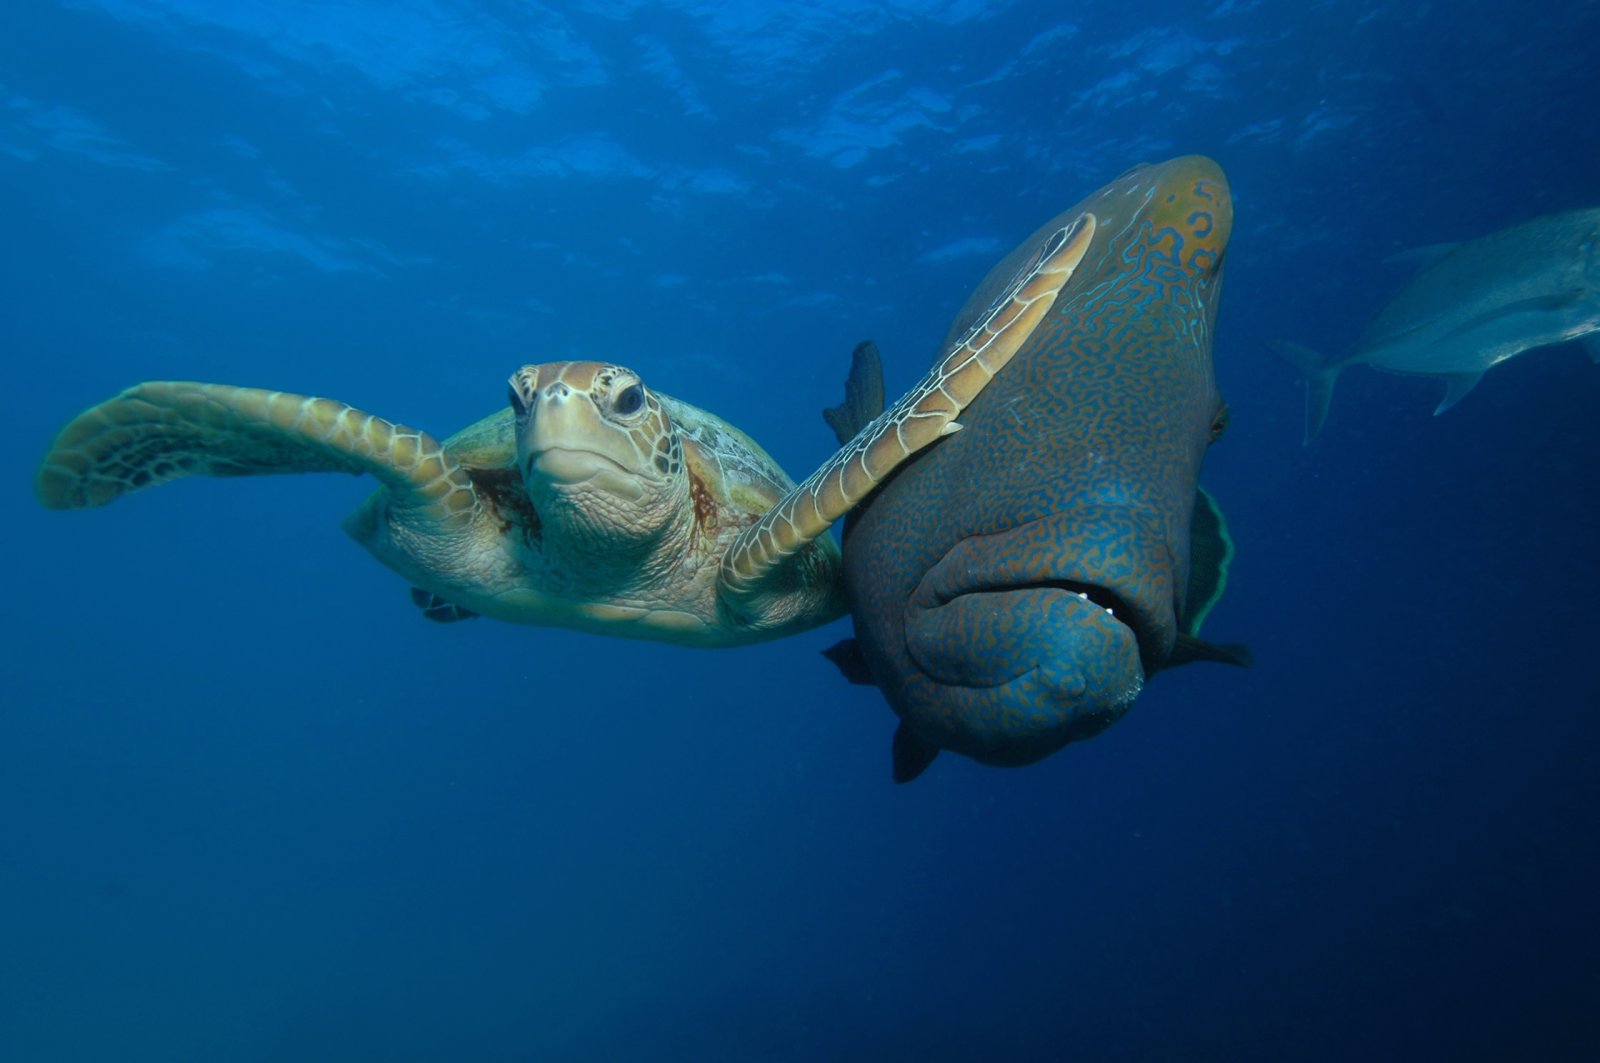 "Slap", © Troy Mayne, Winner of the Padi Under The Sea category, Comedy Wildlife Photography Awards